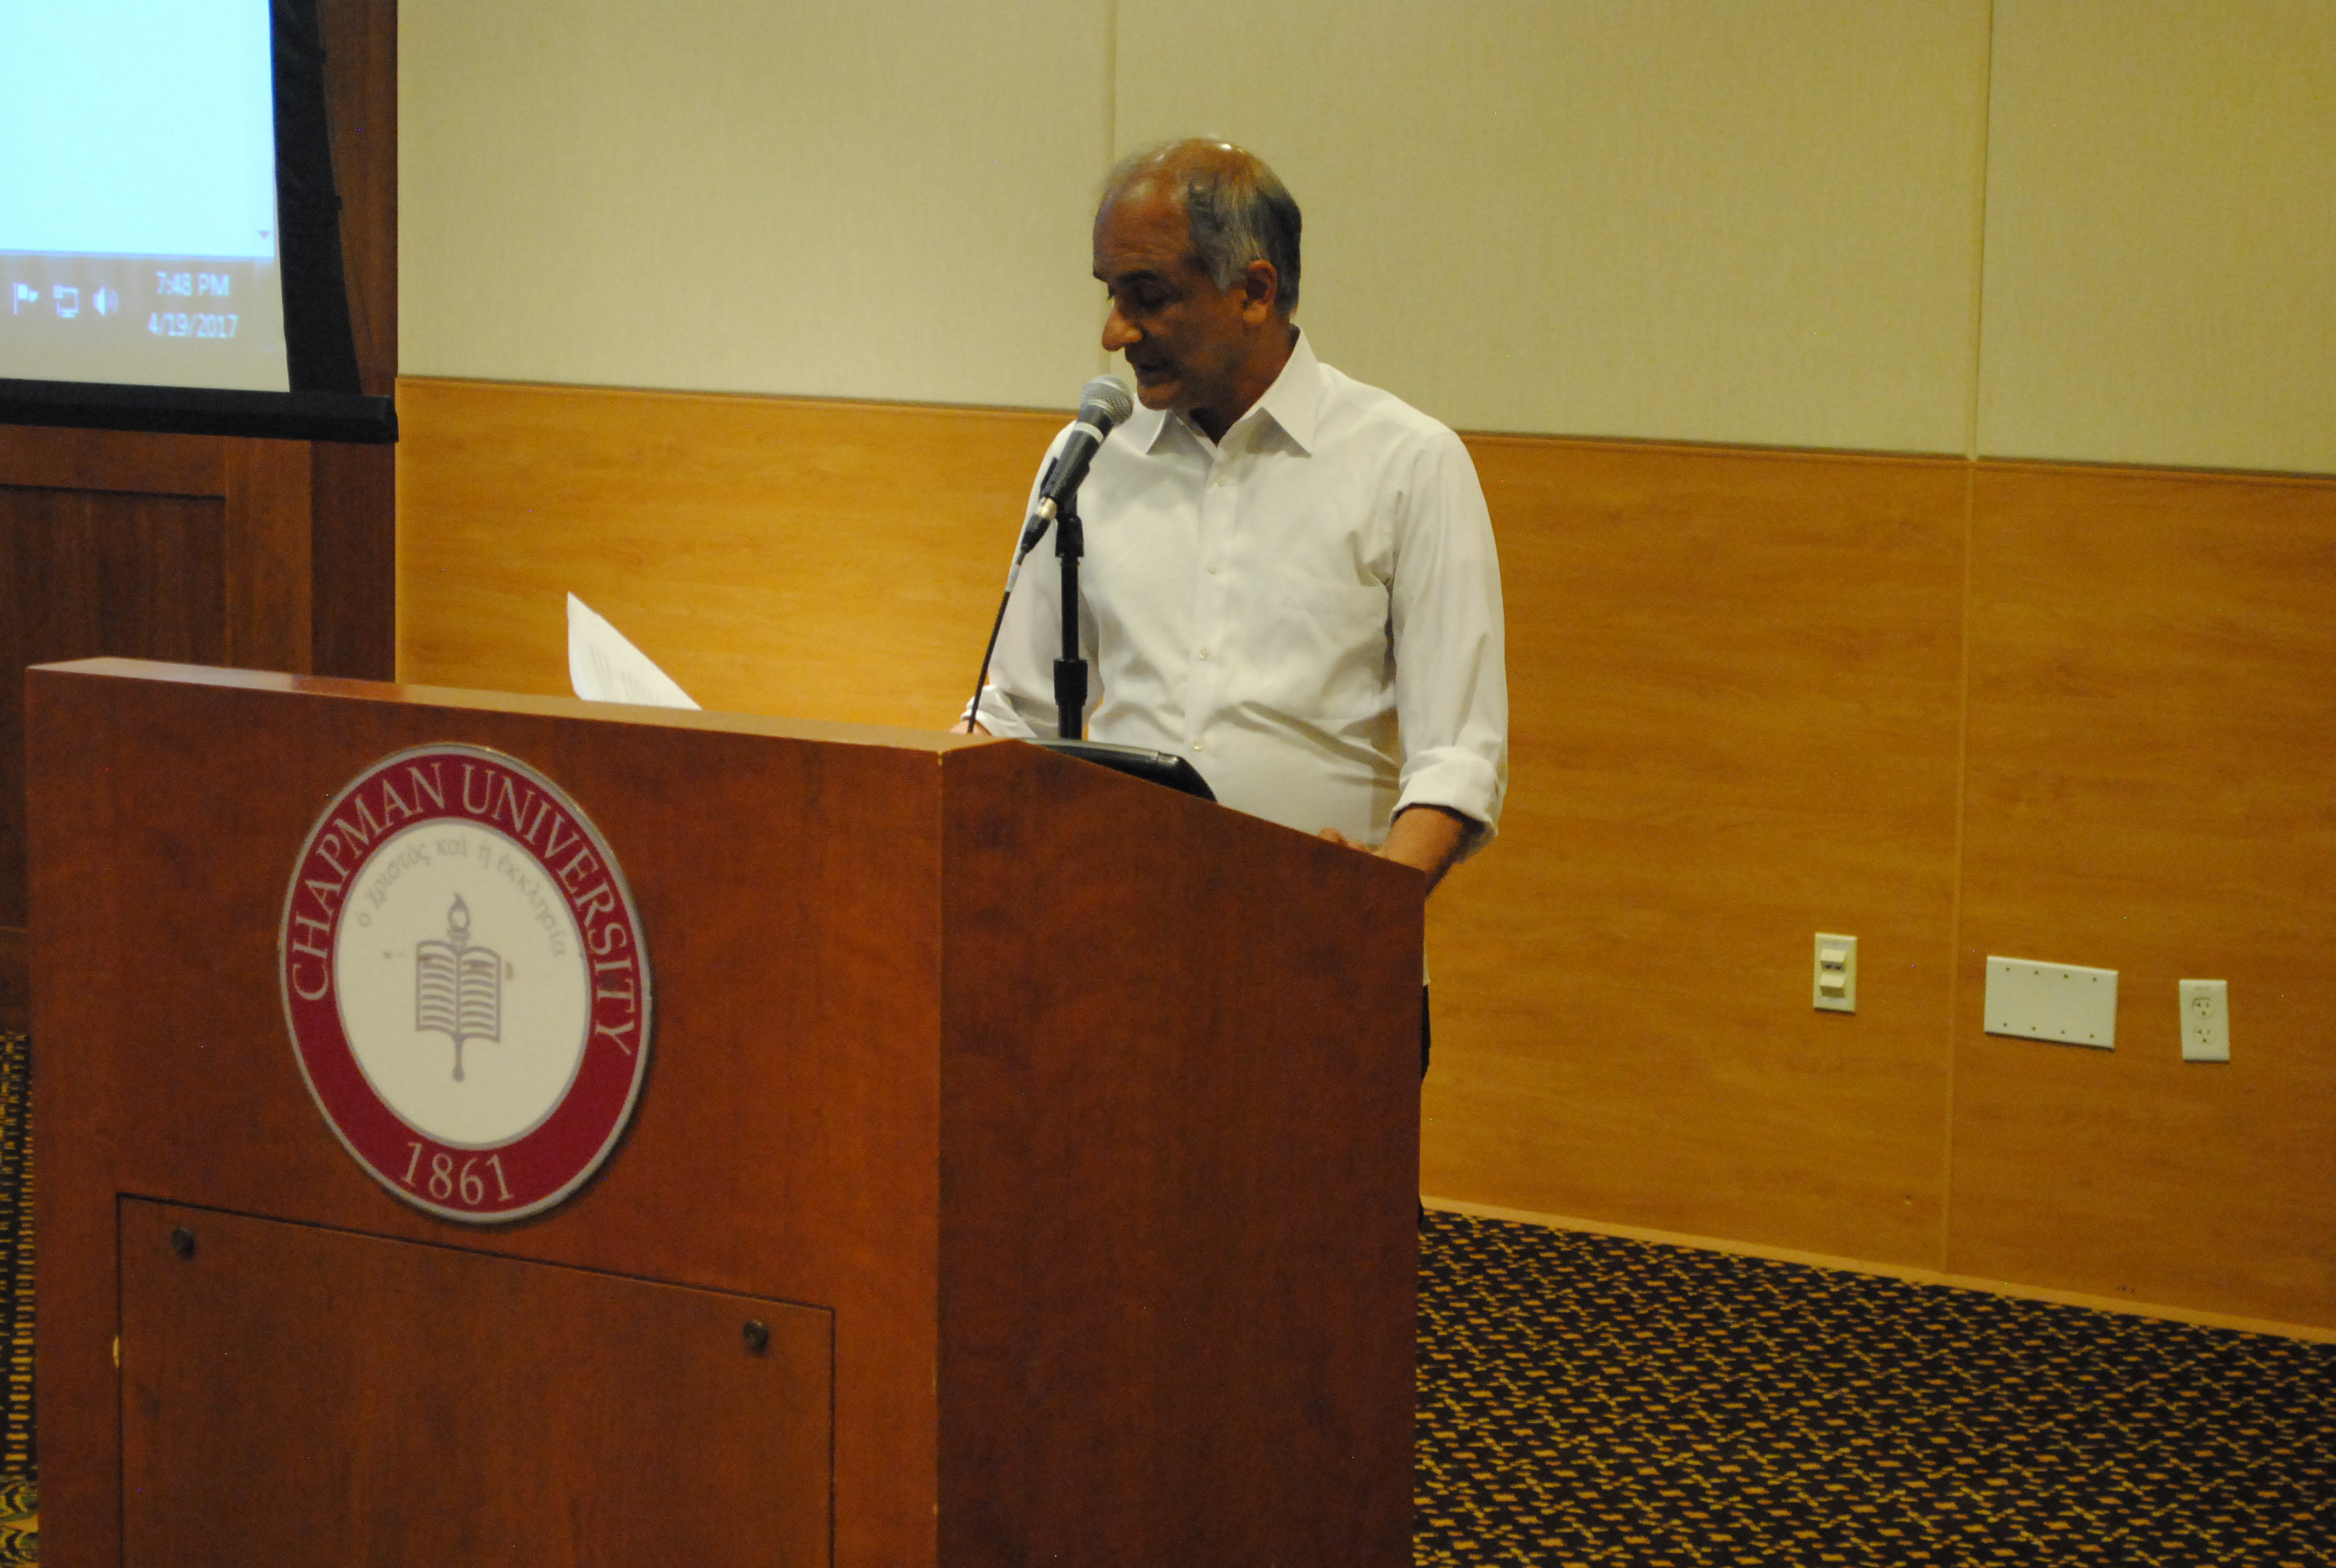 Image; Man at Chapman University podium reading.